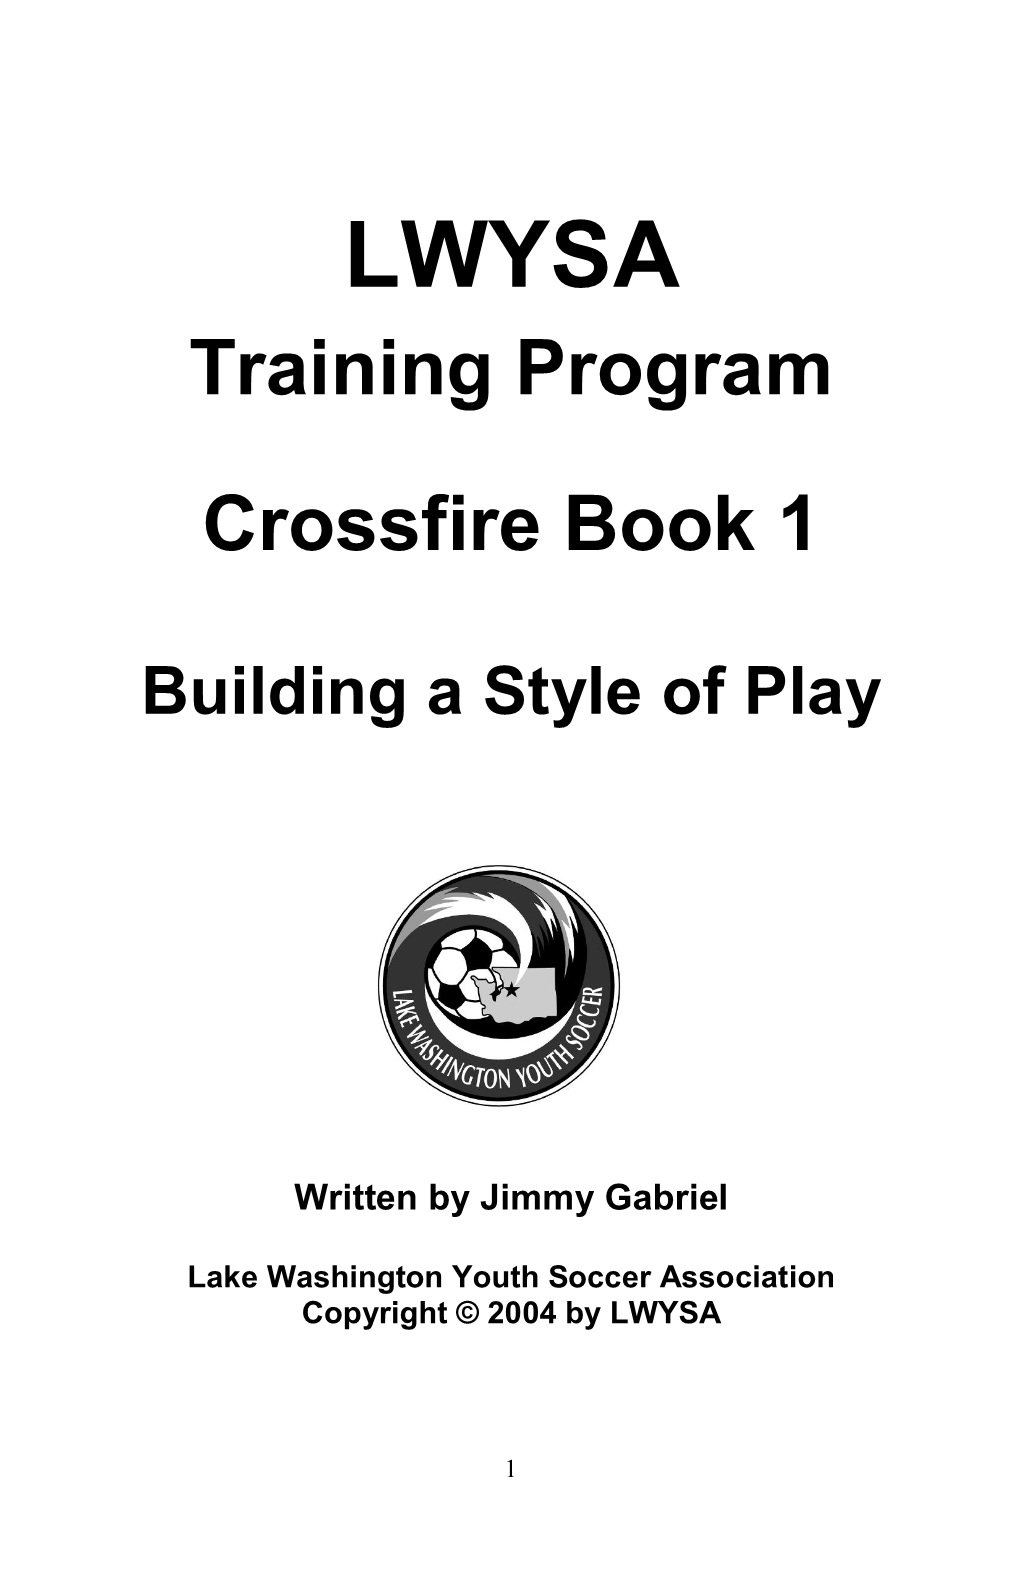 Training Program Crossfire Book 1